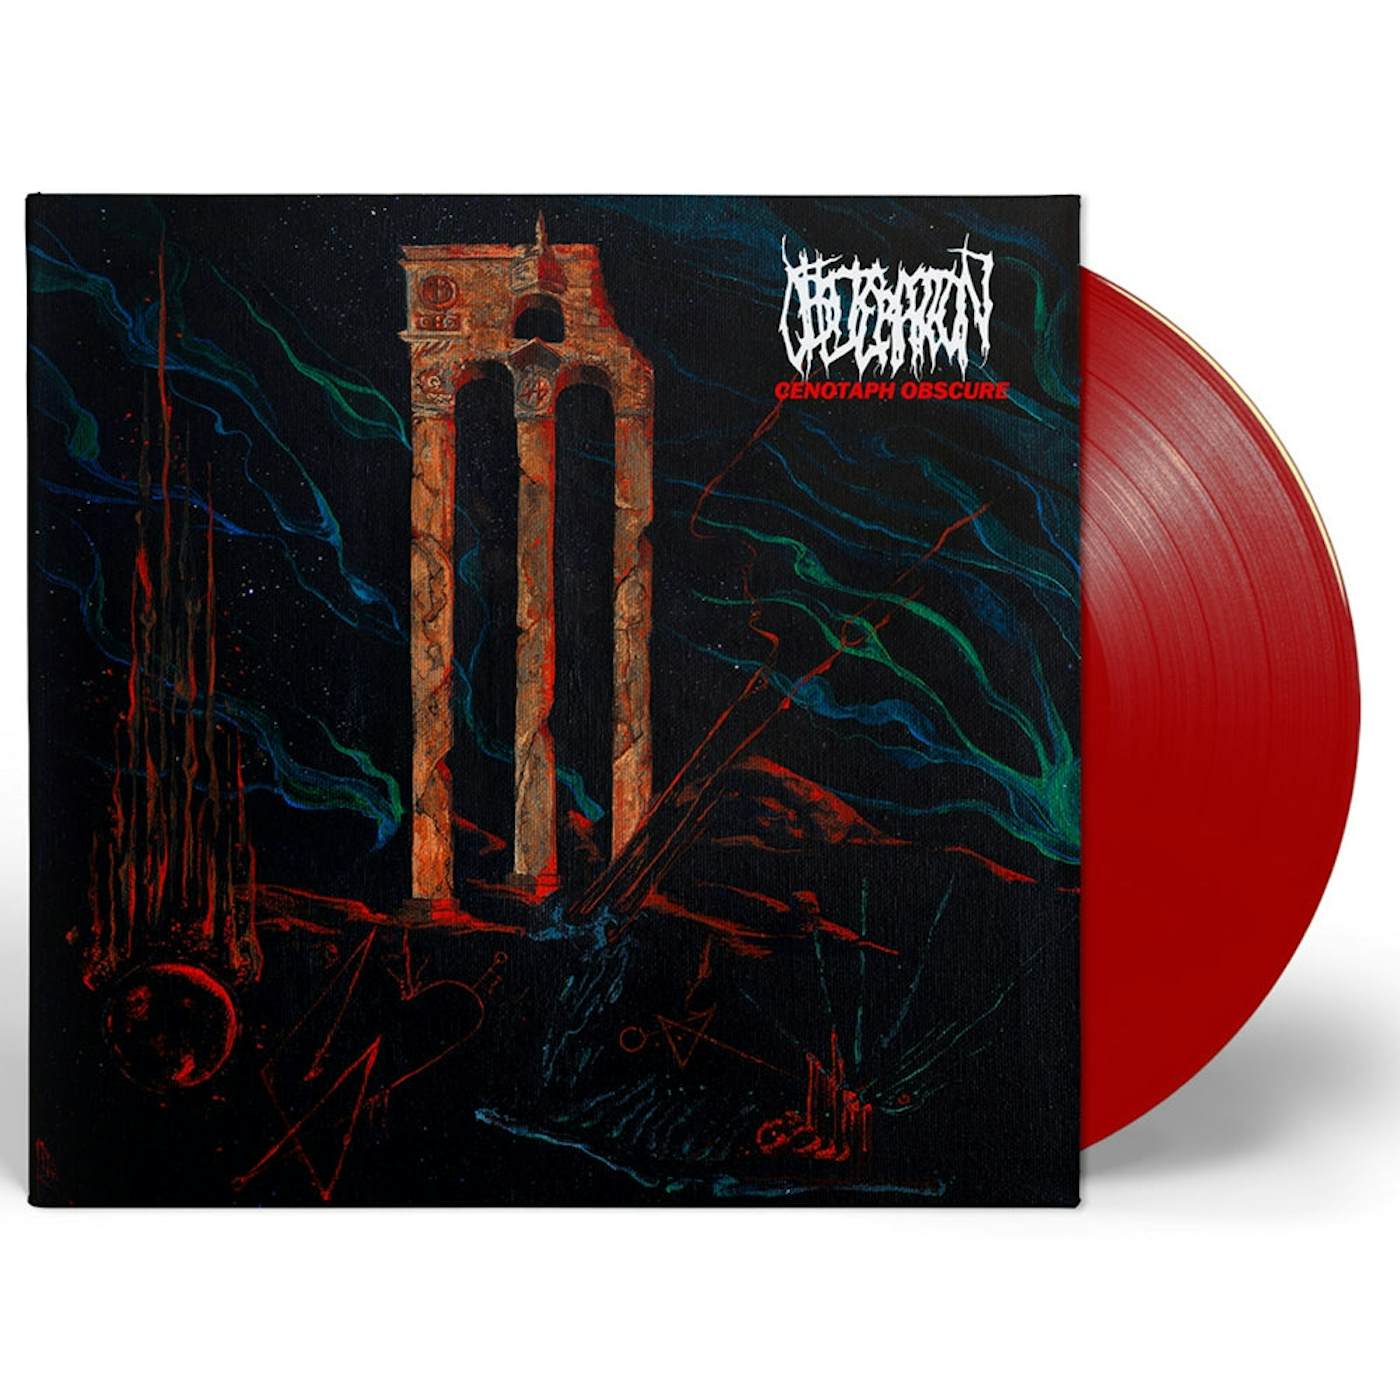 Obliteration LP - Cenotaph Obscure (Red Vinyl)